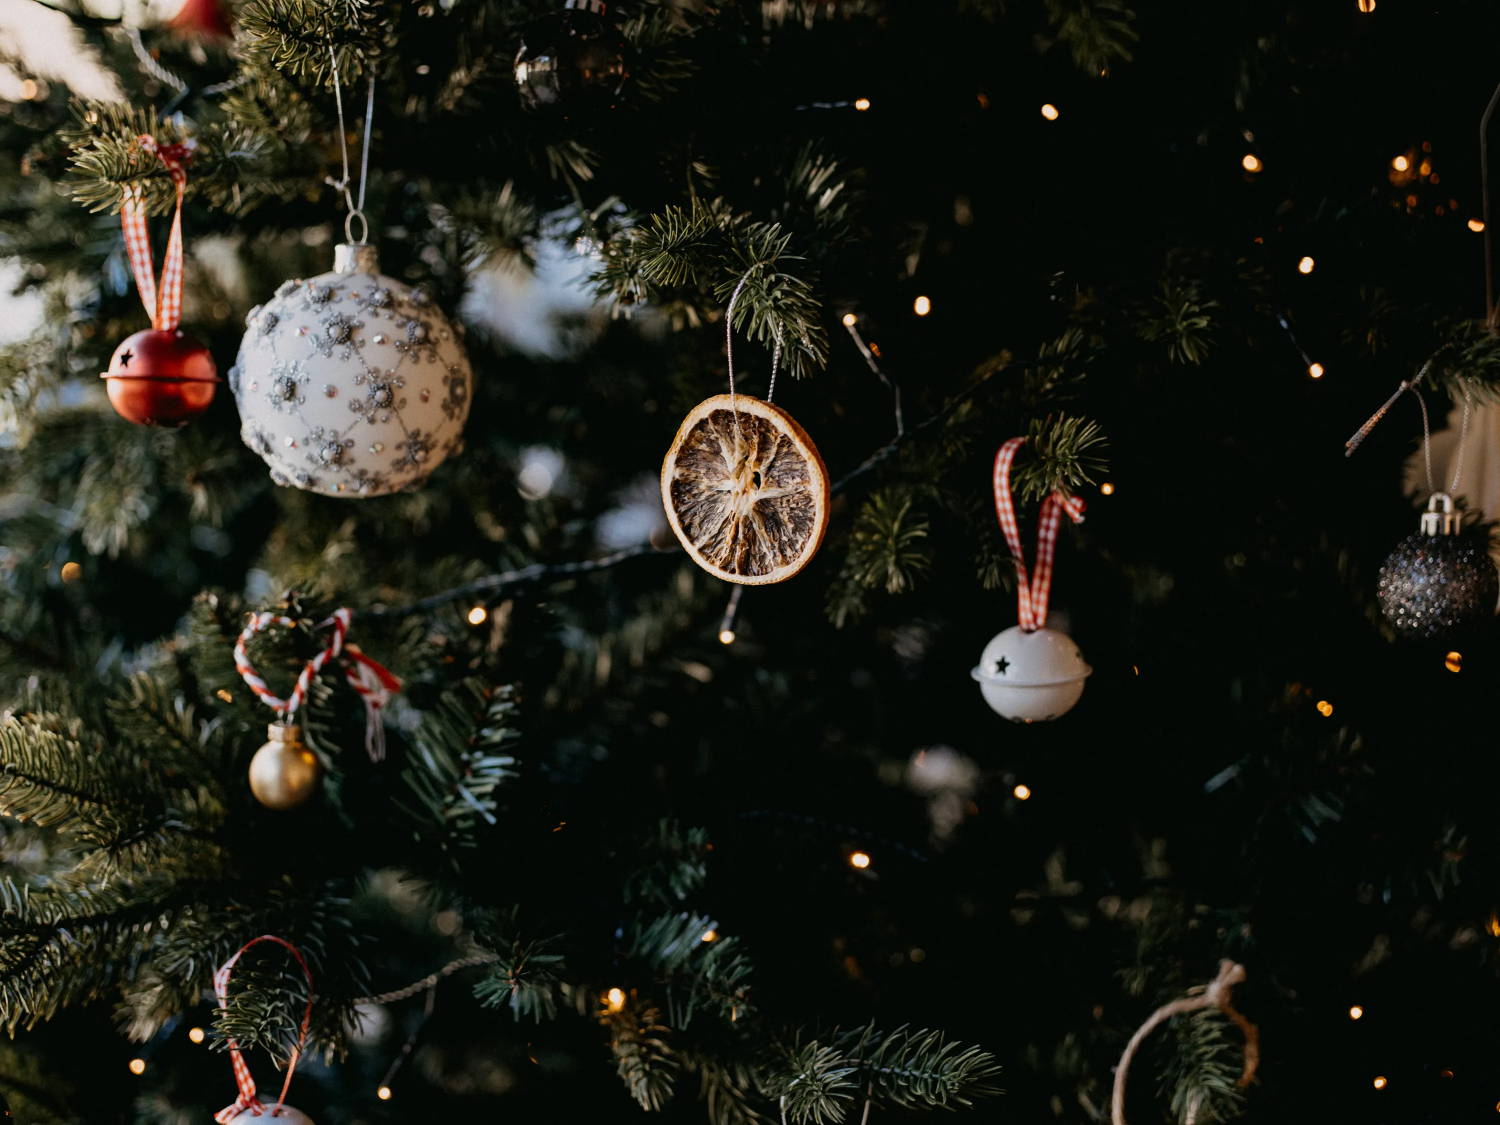 Closeup on ornaments on a Christmas tree